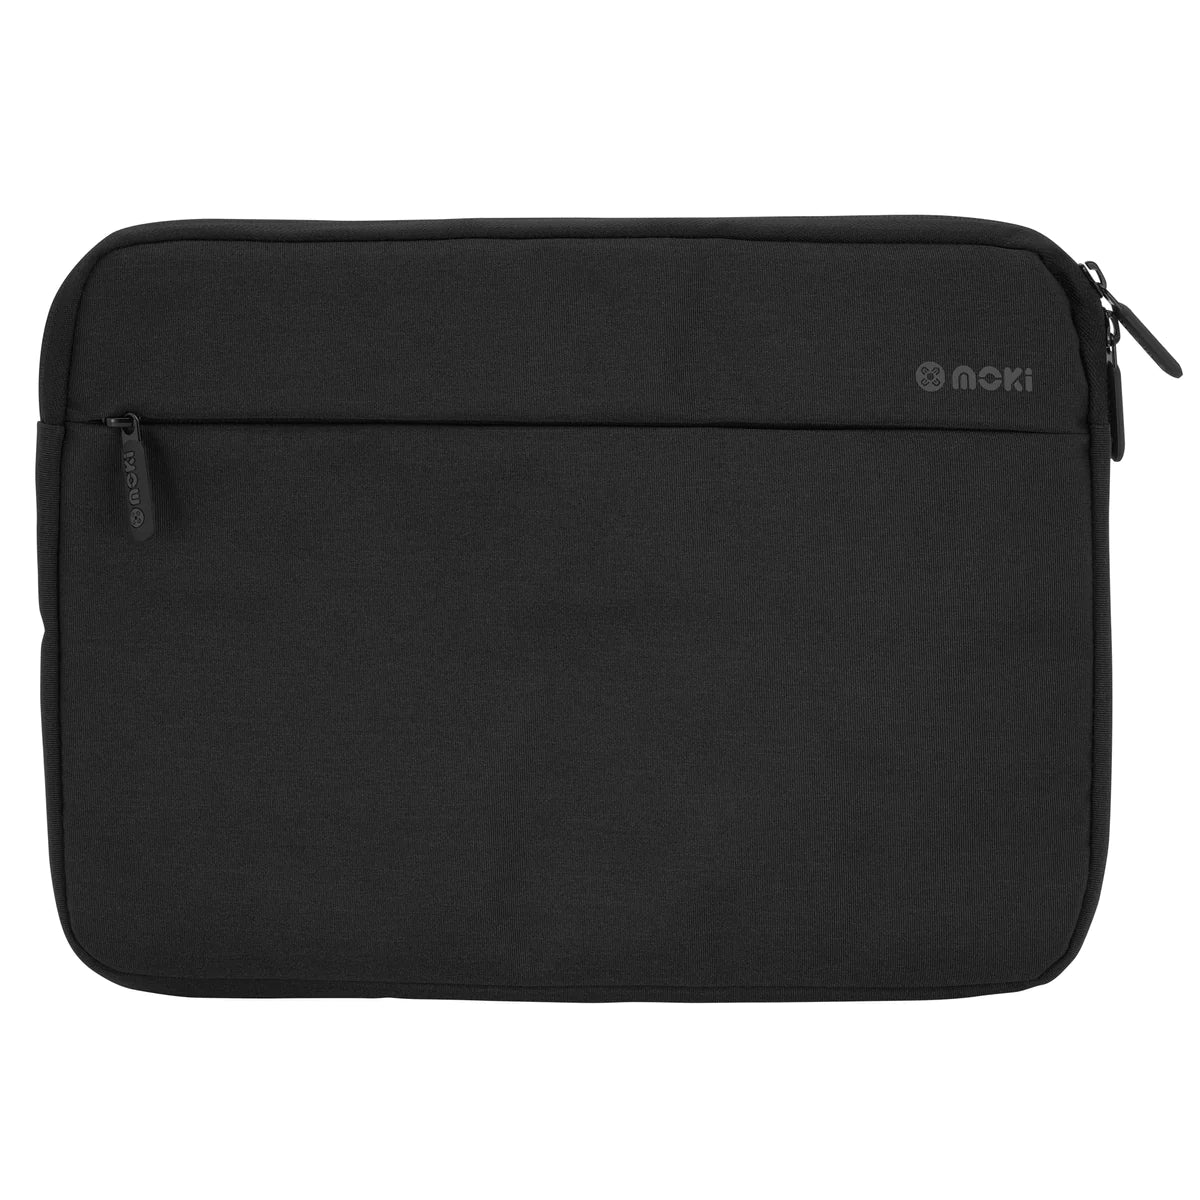 Moki Transporter Laptop Sleeve Black